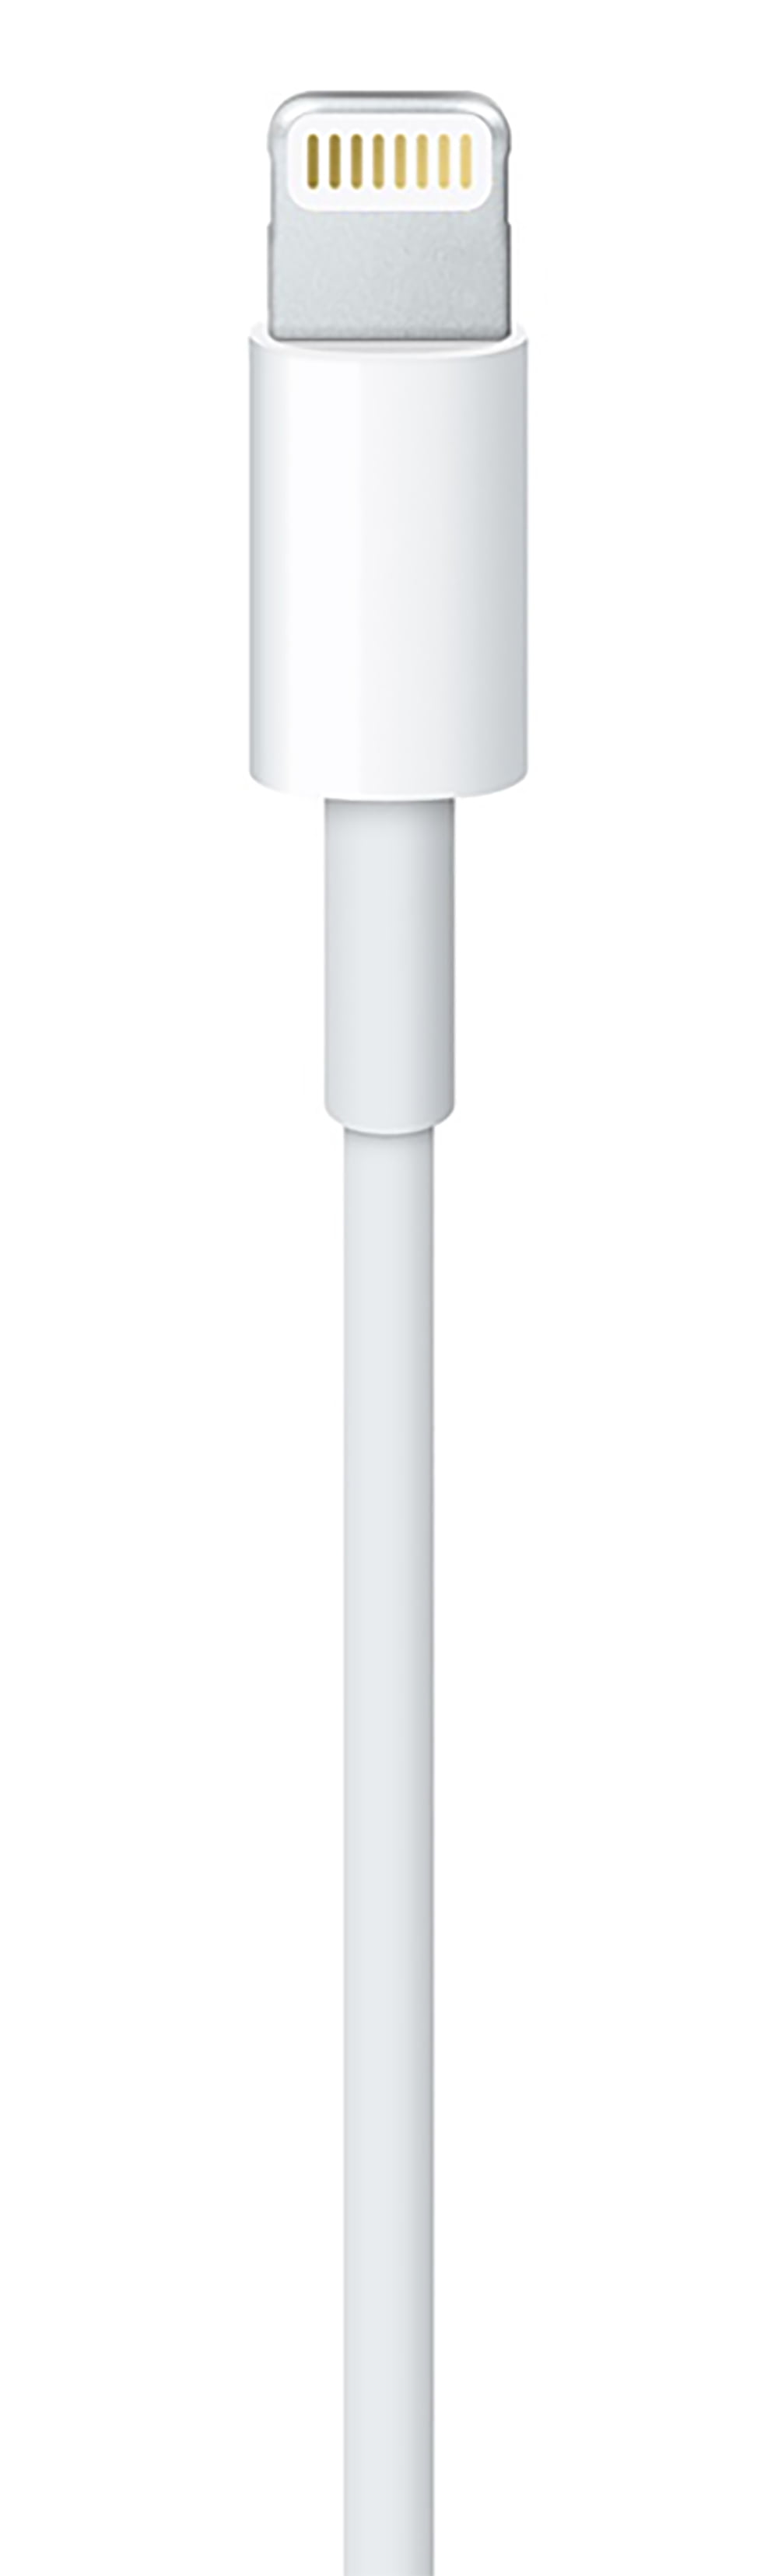 Apple Cable Lightning de 1 m